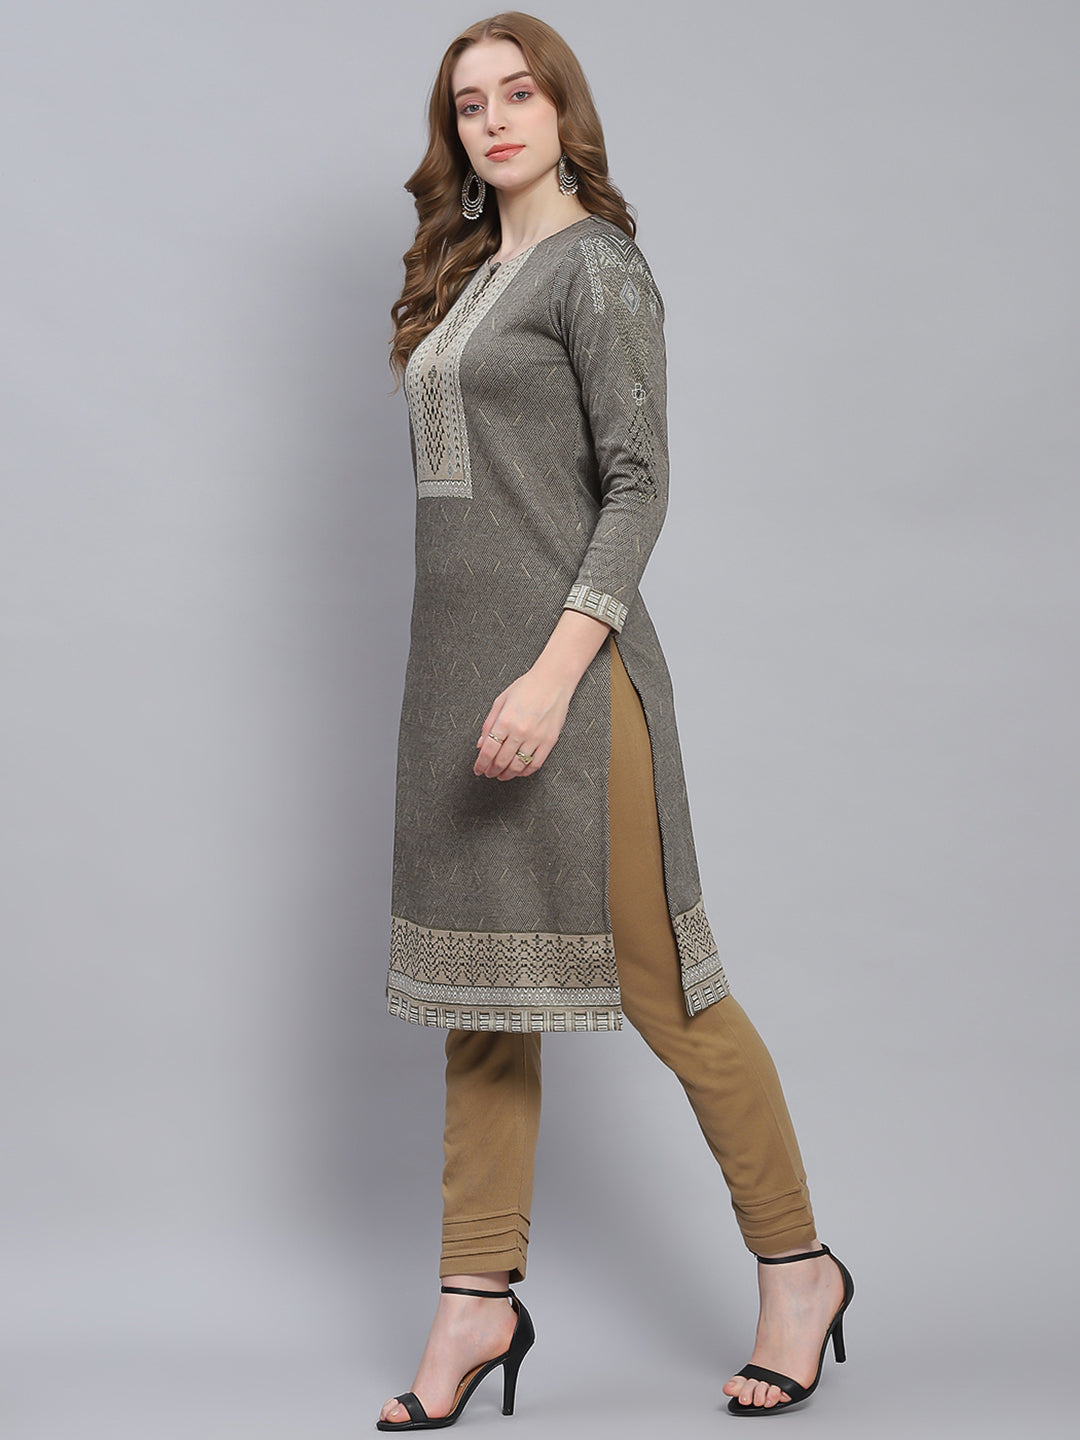 eloria Leaves Printed Women's Fashion Stylish Knee Length In Round Neck Design  Kurti Dress - Walmart.com